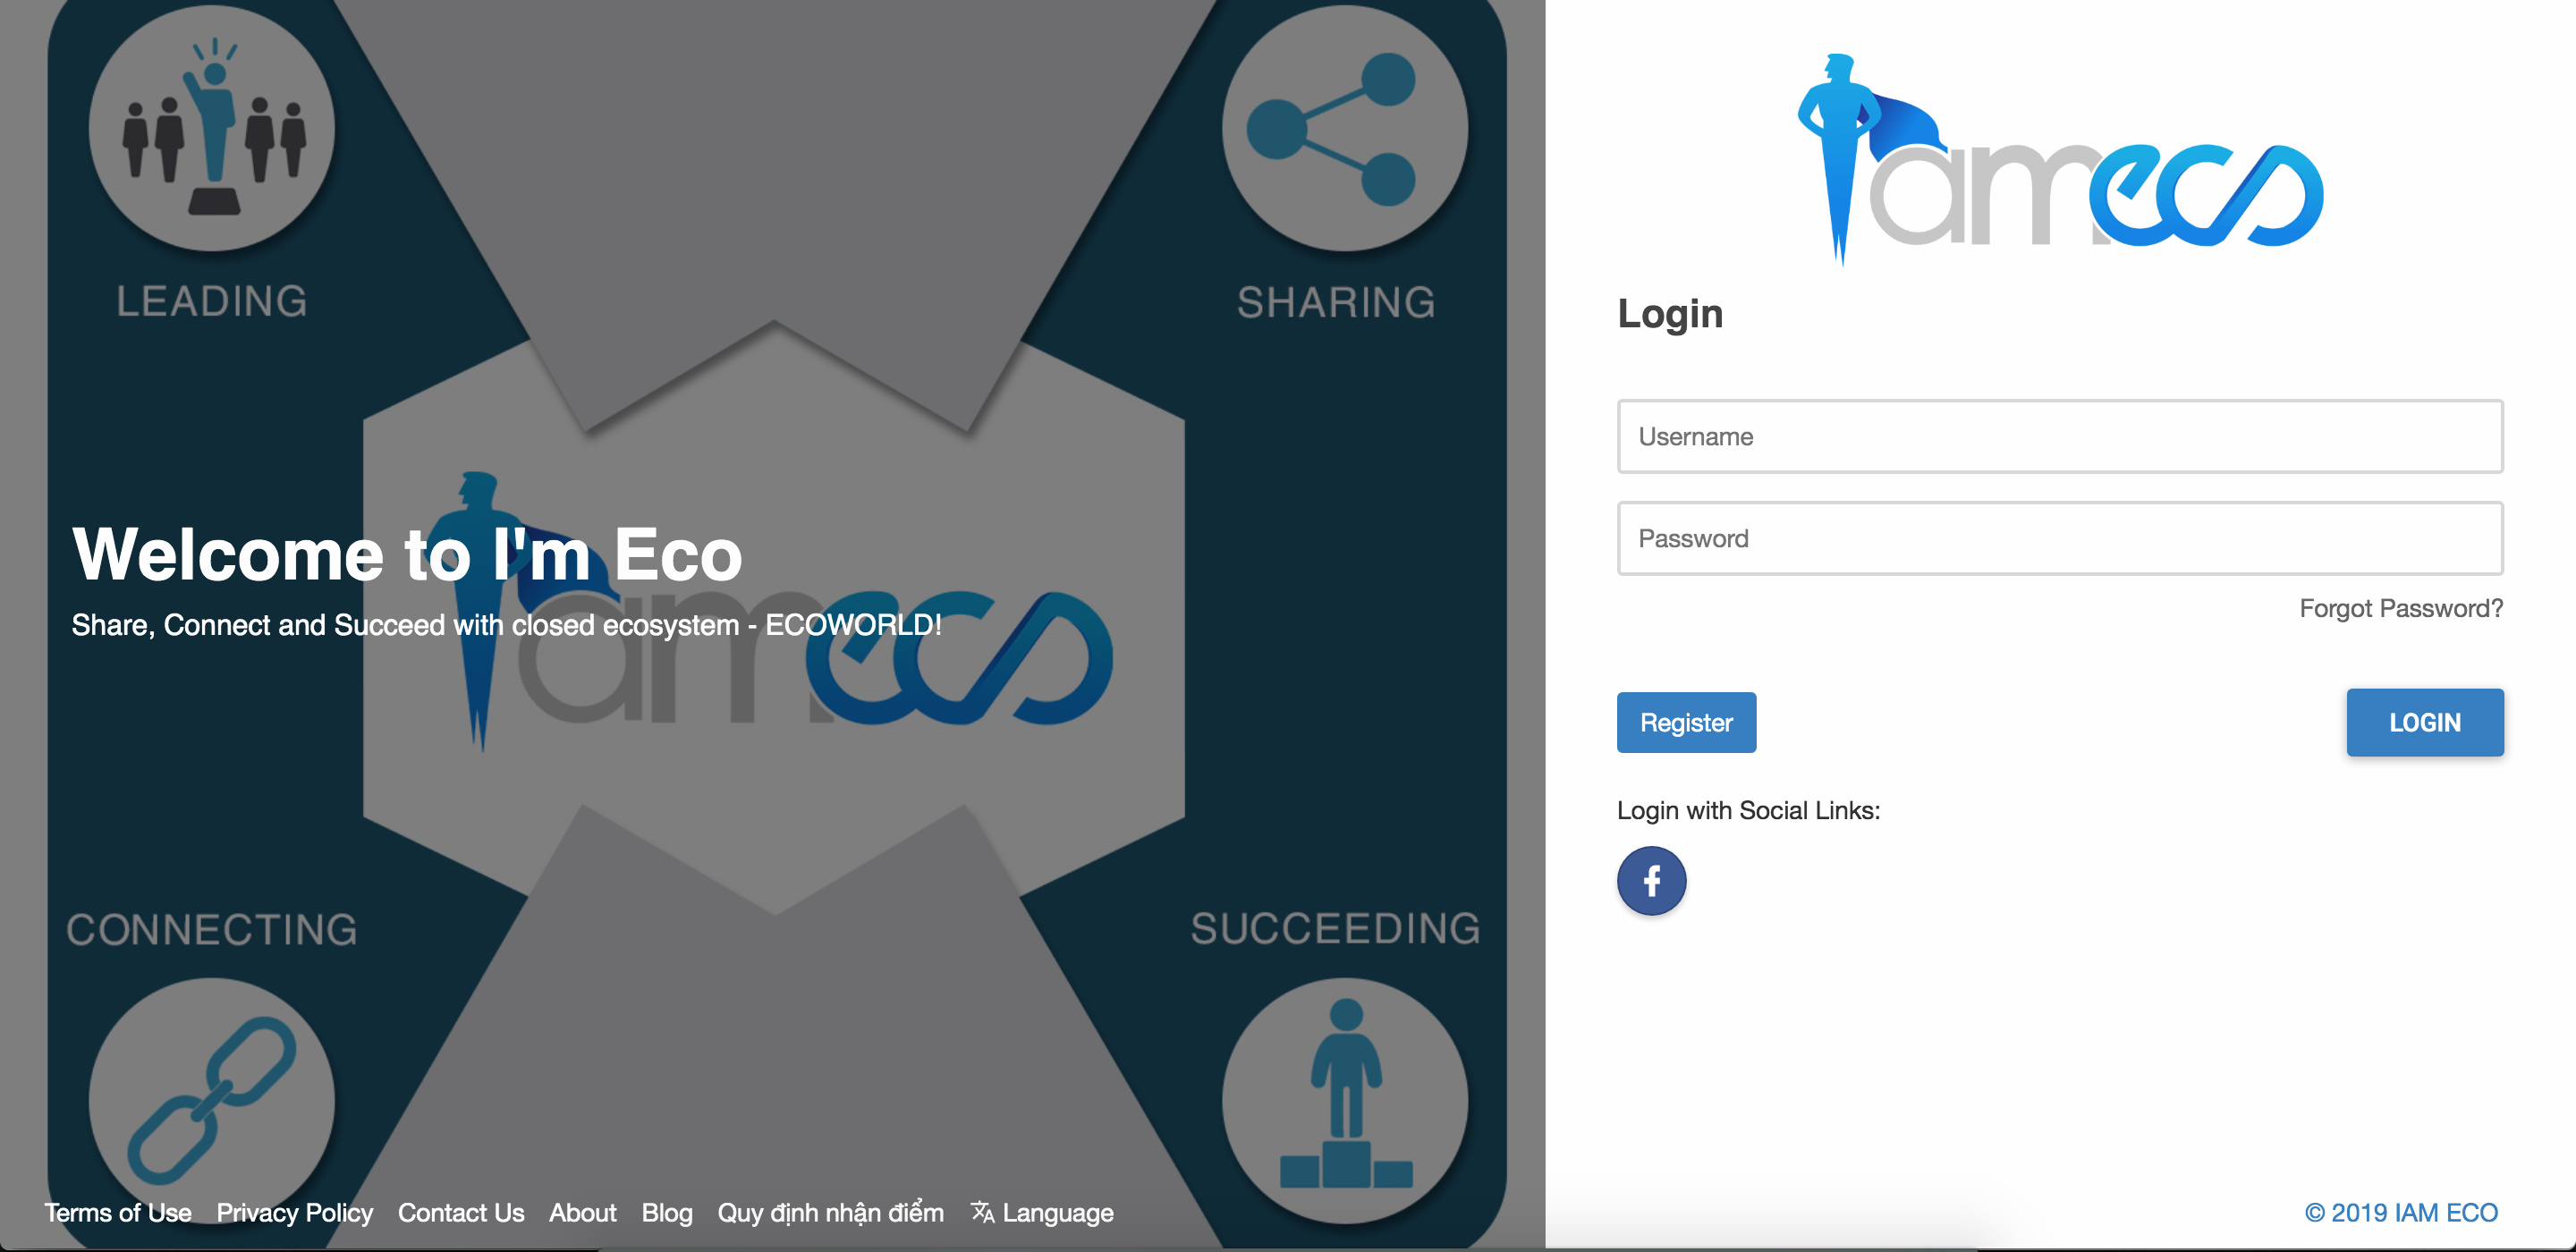 Iameco Social network